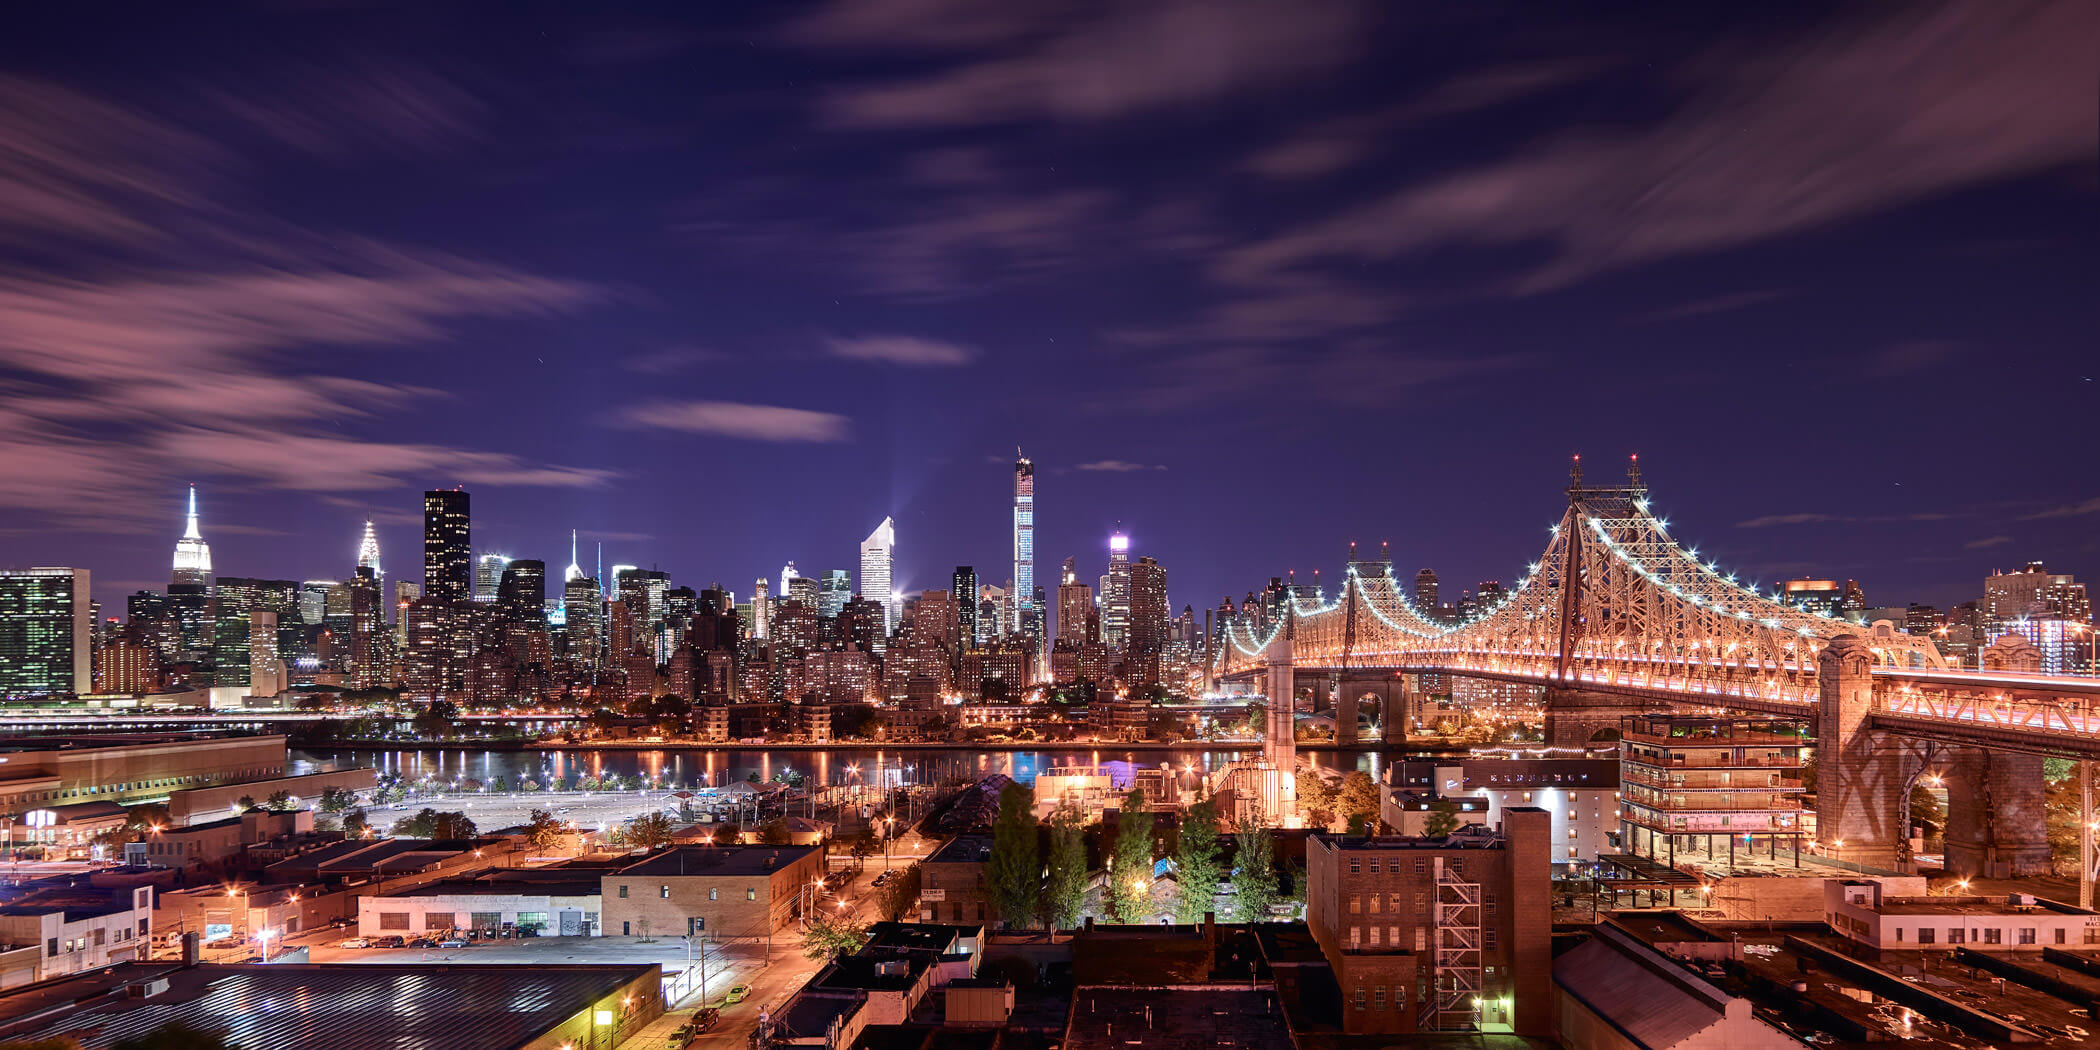 New York City - The 2014 Manhattan Cityscapes